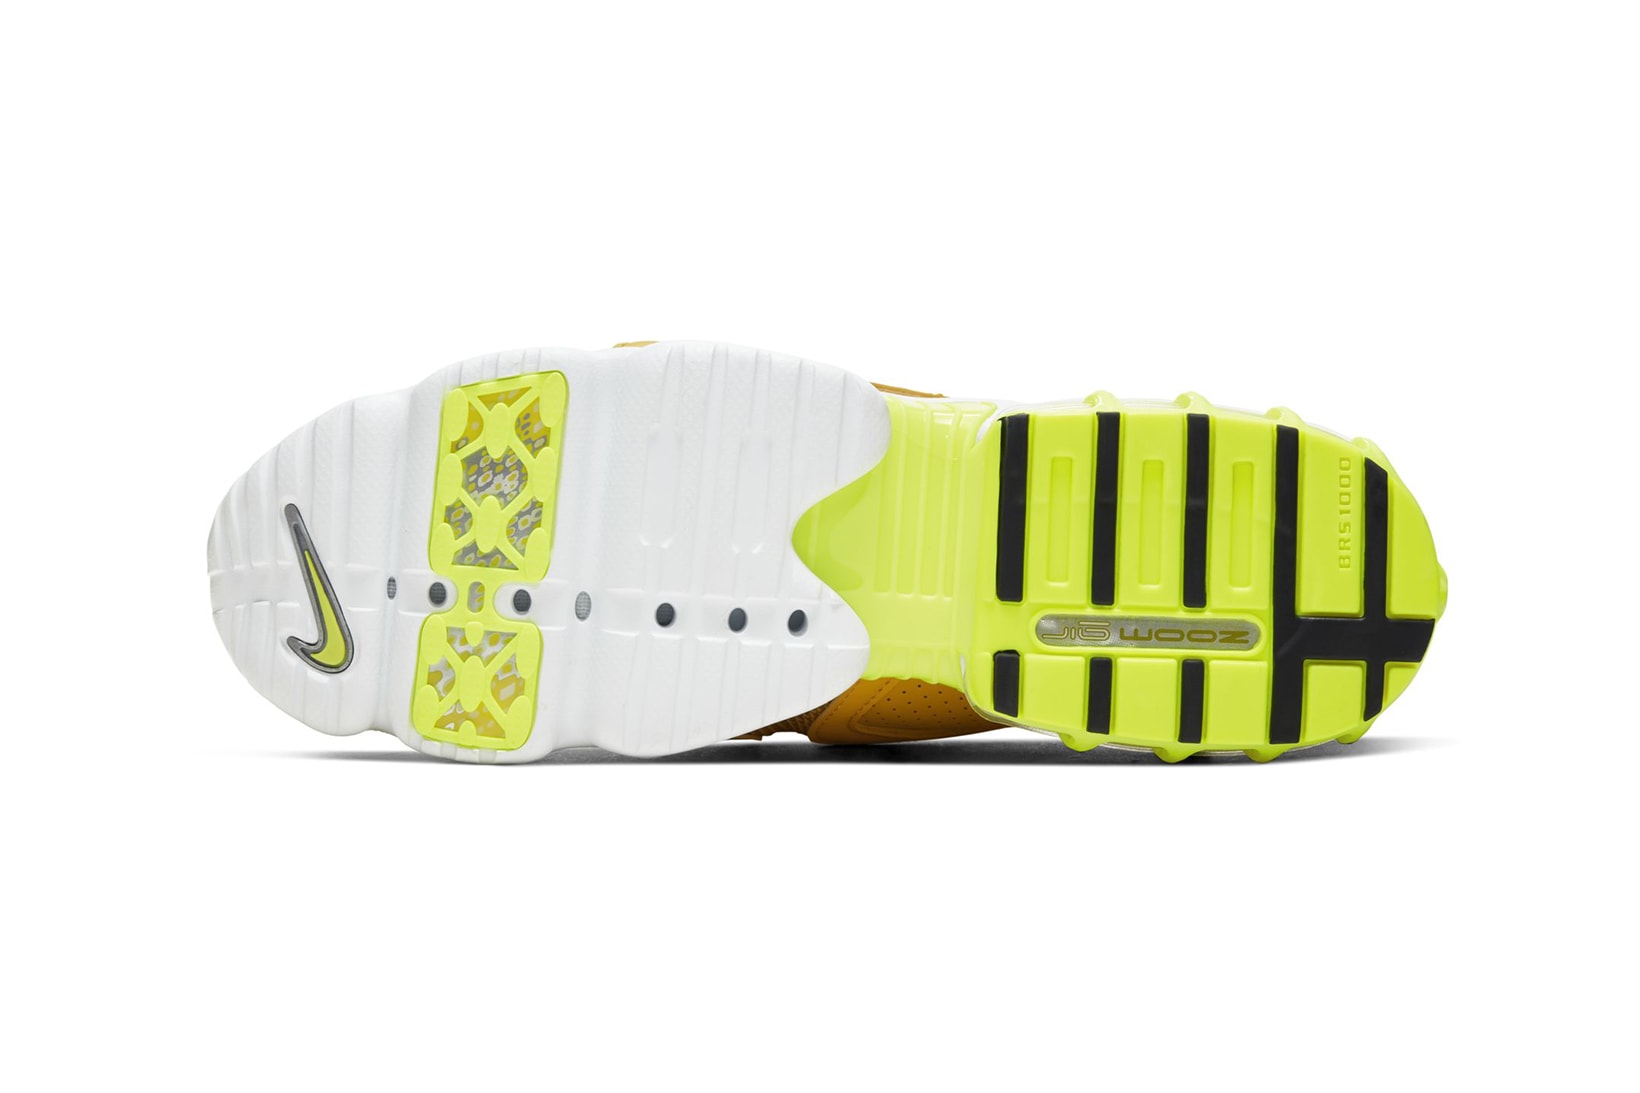 nike air zoom spiridon cage 2 sneakers mint green pistachio yellow shoes sneakerhead footwear